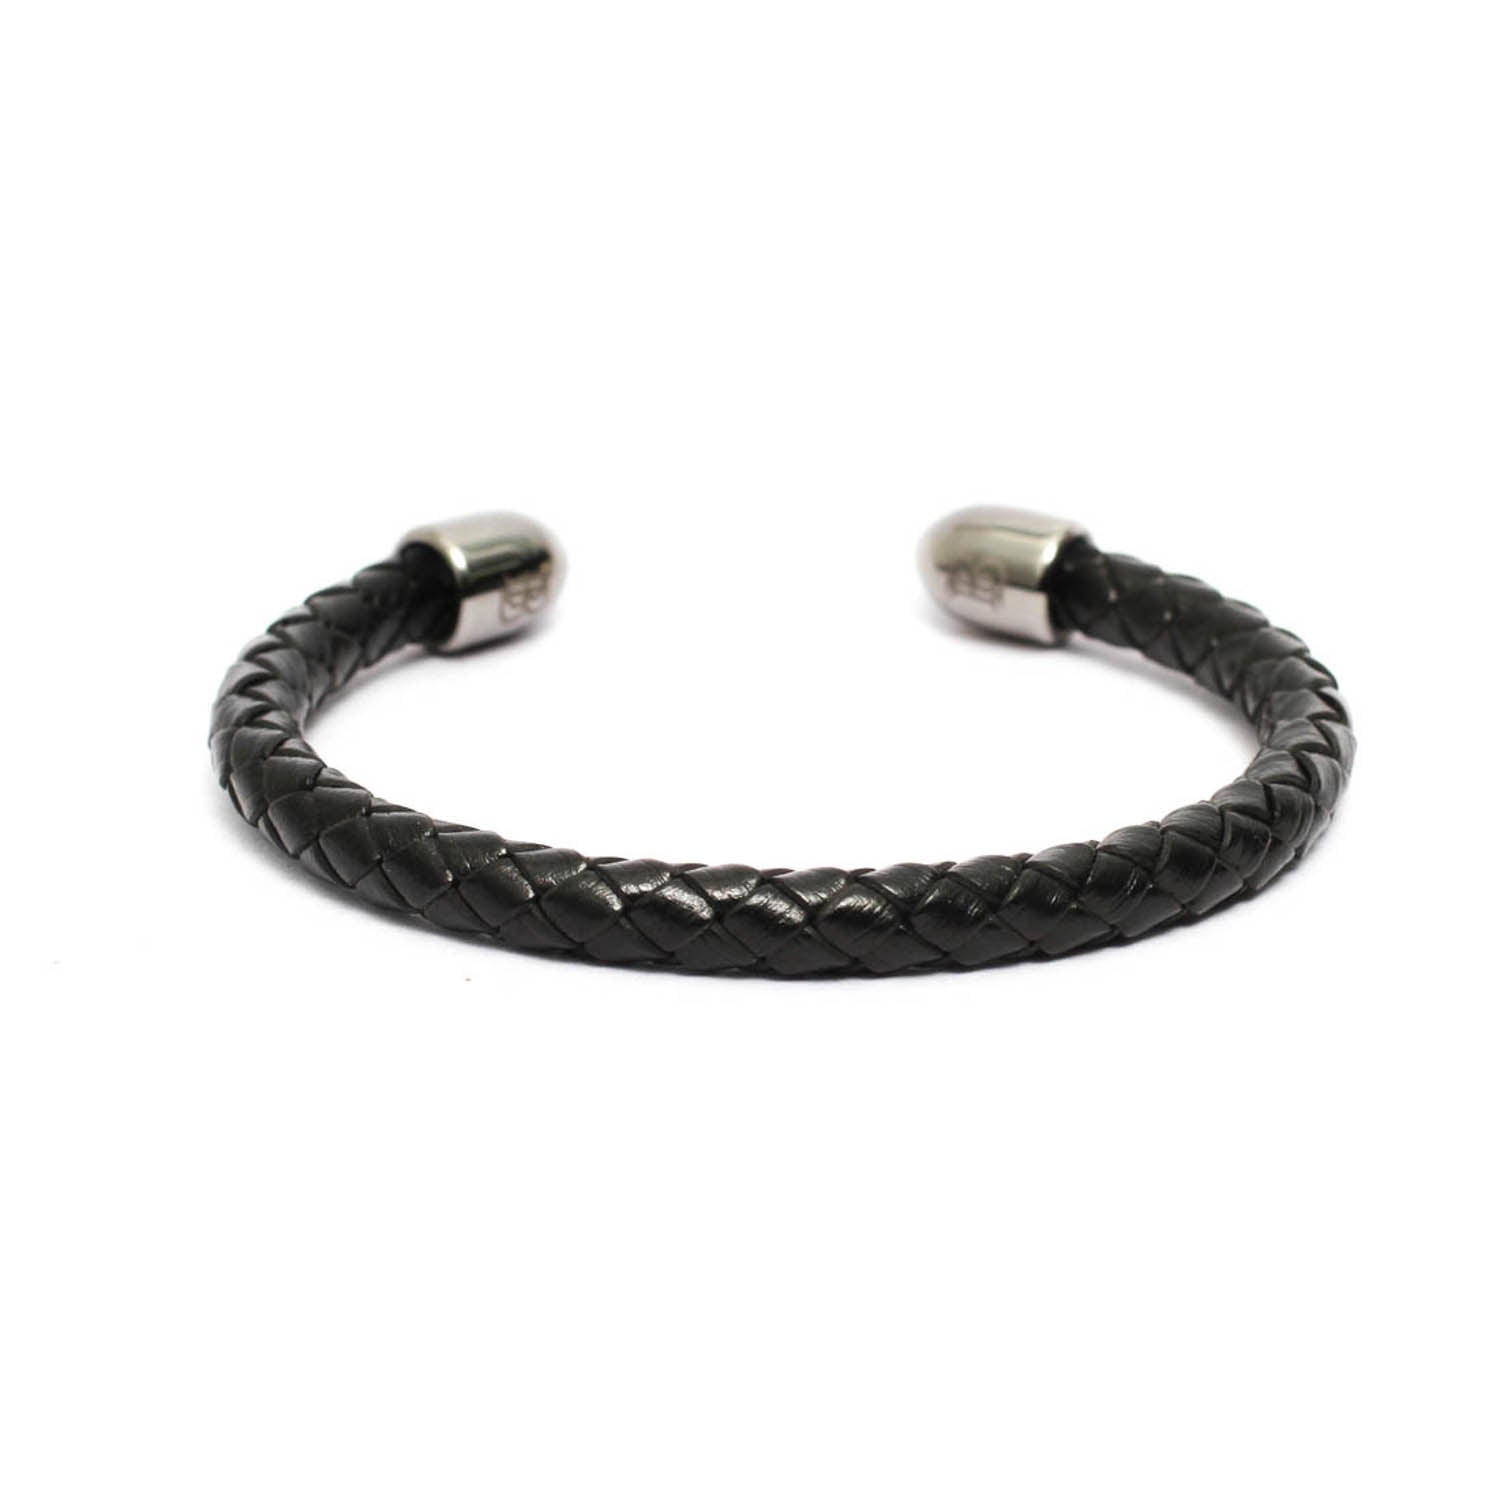 6mm Black Round Braided Leather Cuff Bracelet